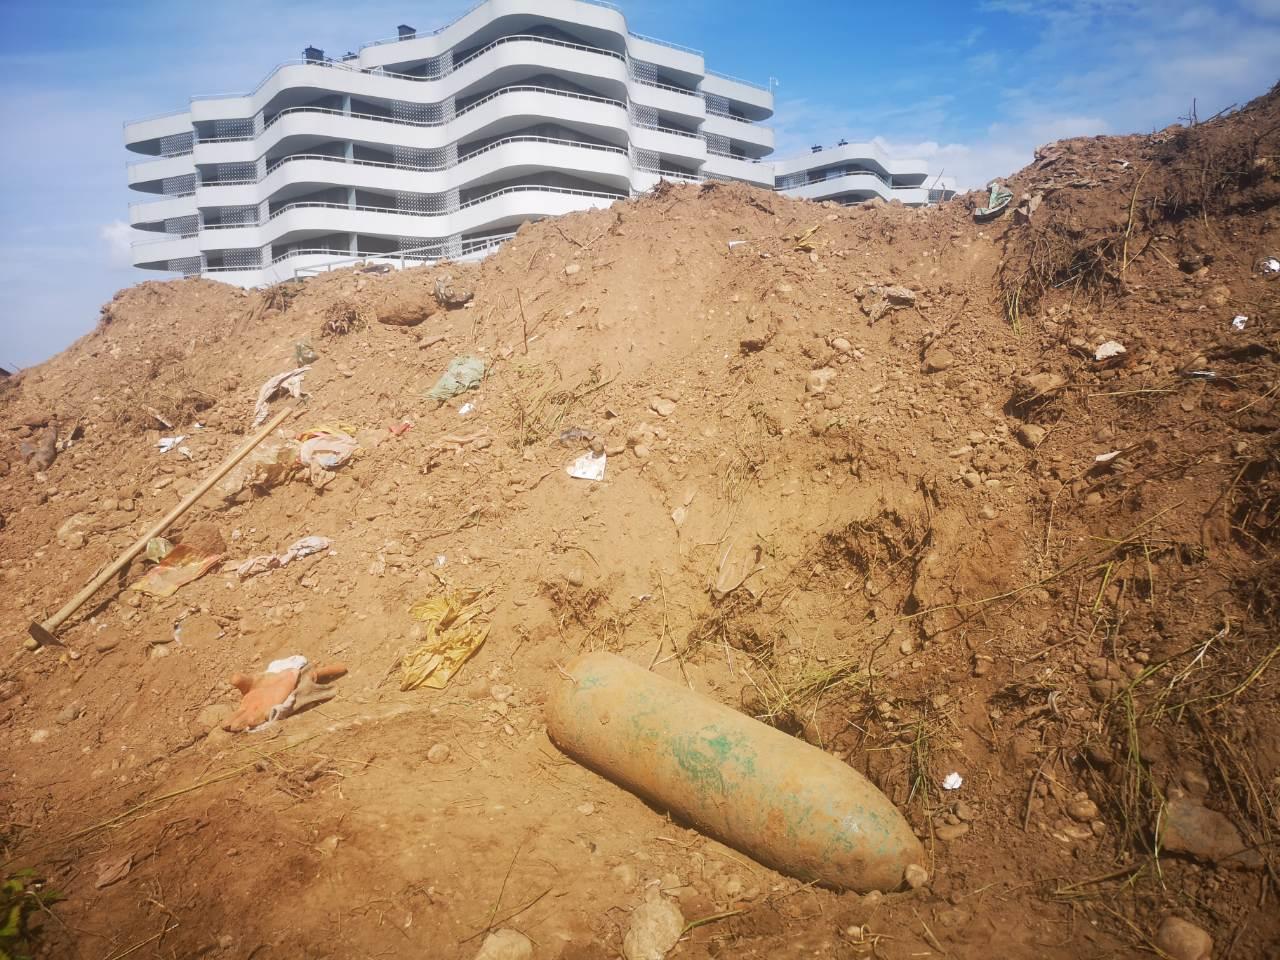 Pronađena bomba u Otesu - Avaz